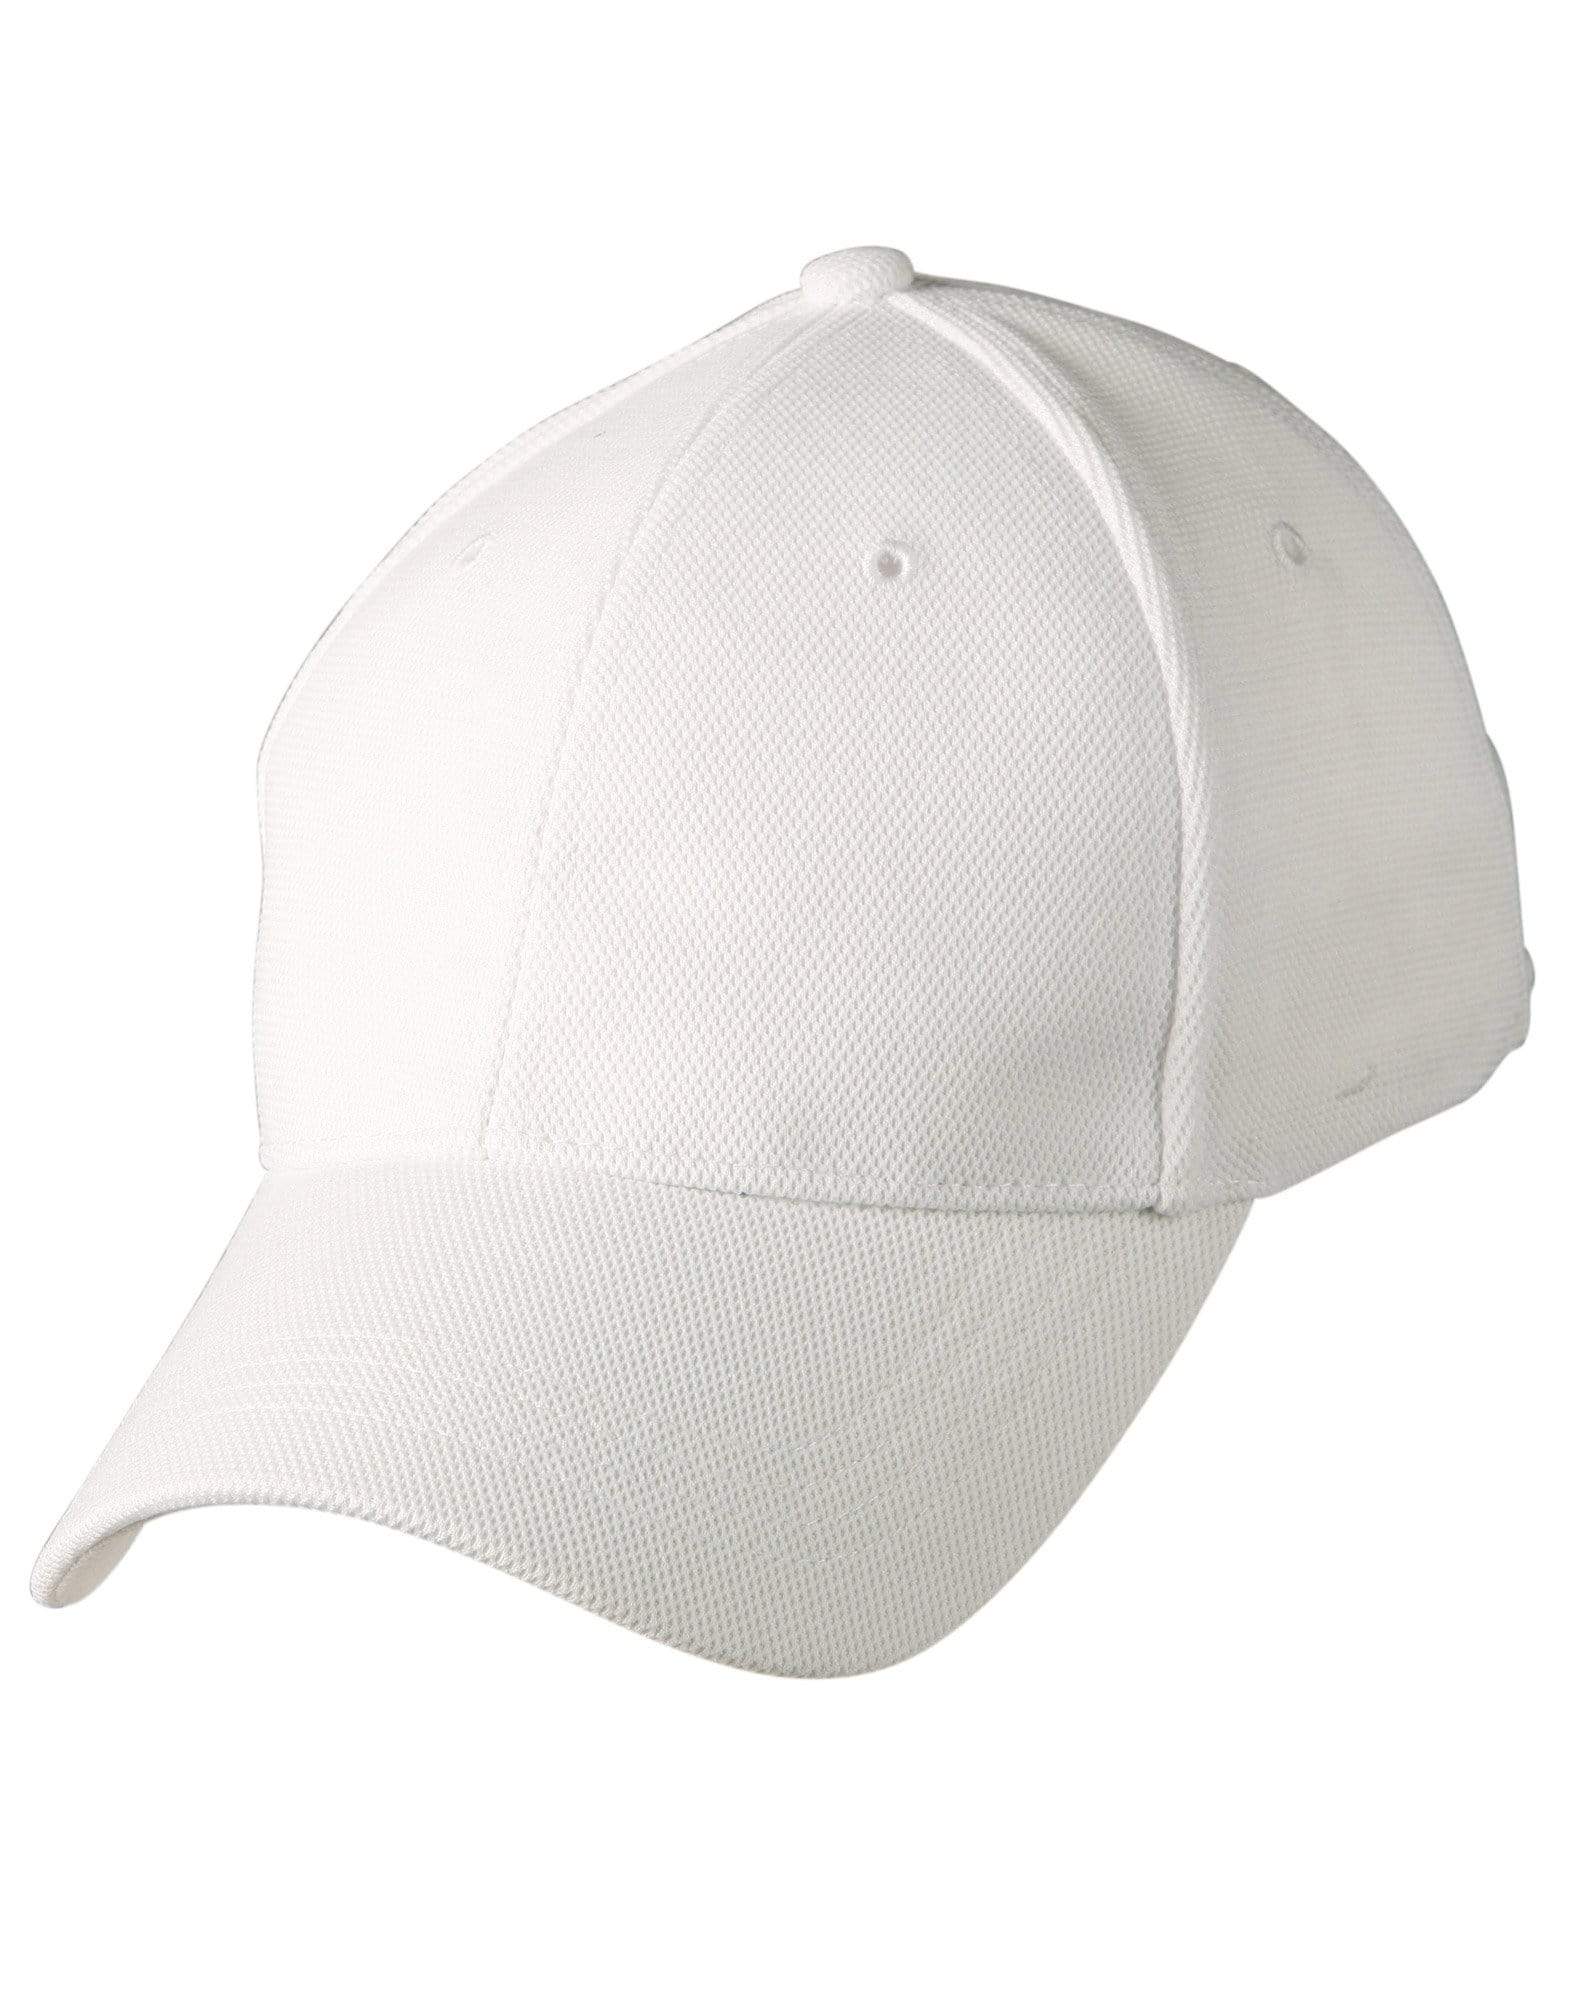 Pique Mesh Cap CH77 Active Wear Australian Industrial Wear White One size 